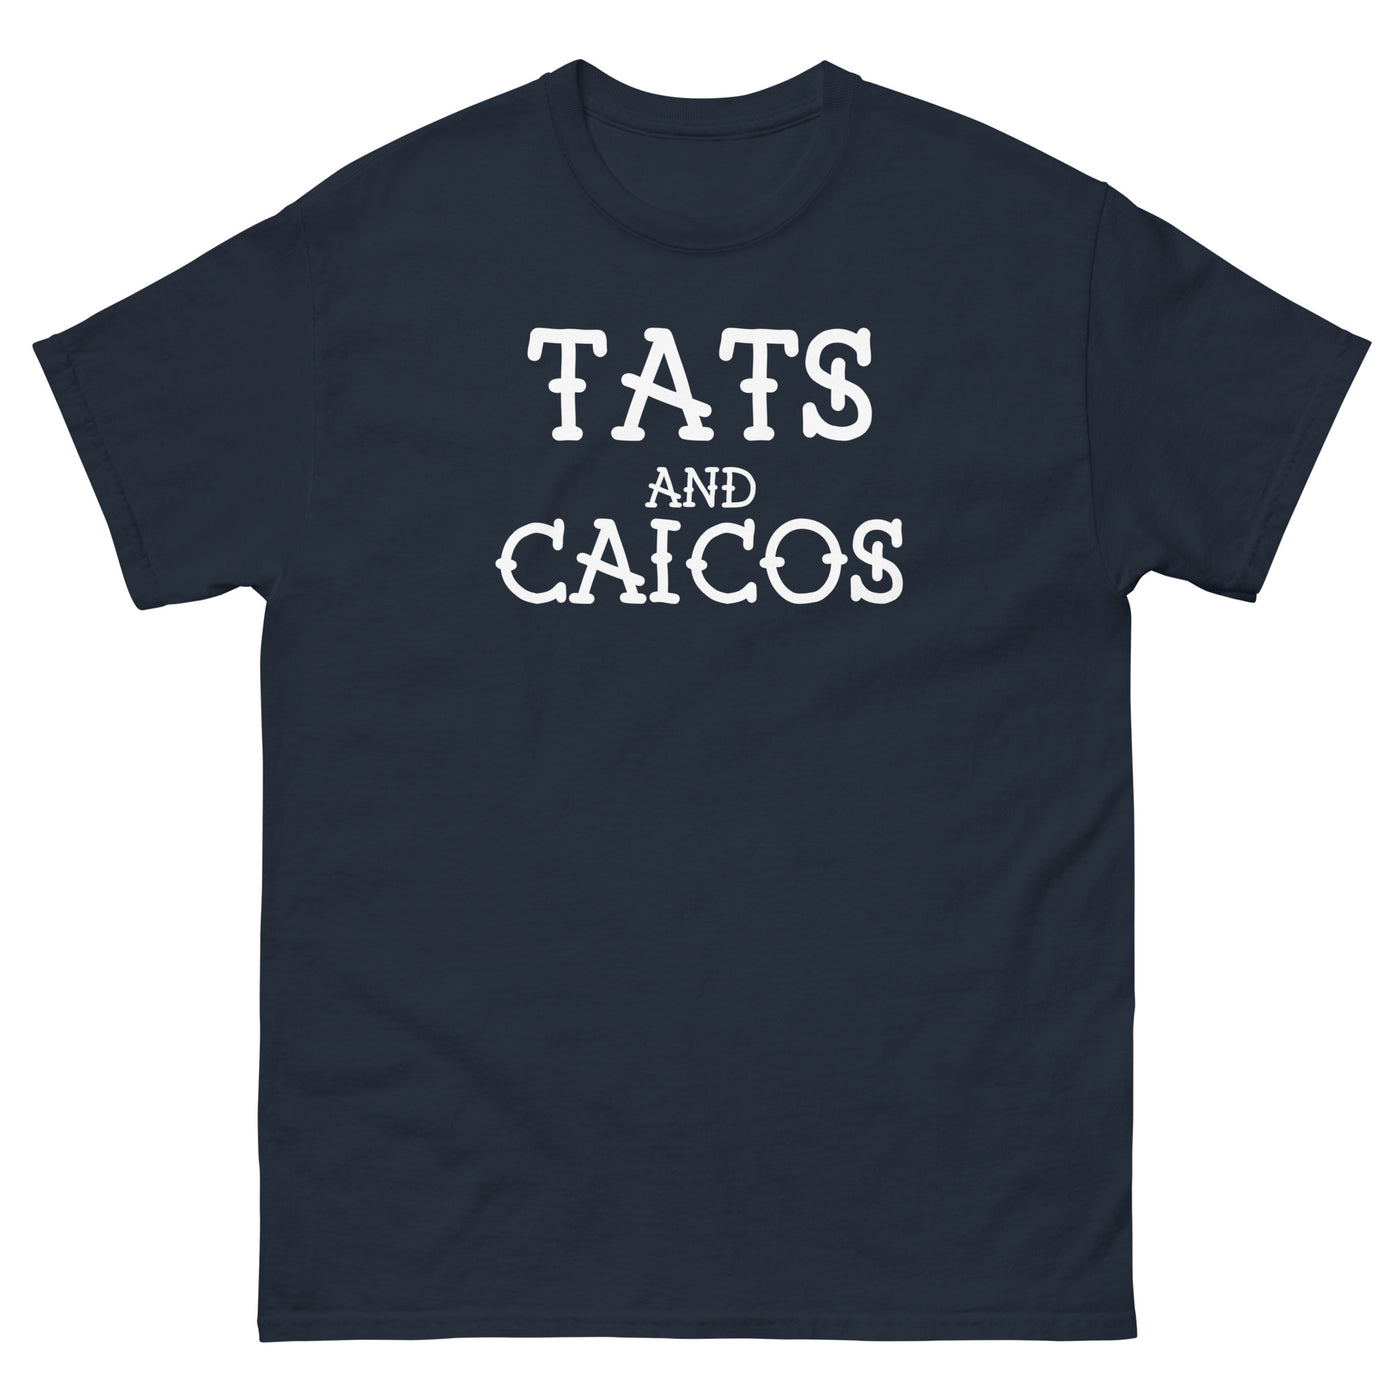 Tats and Caicos